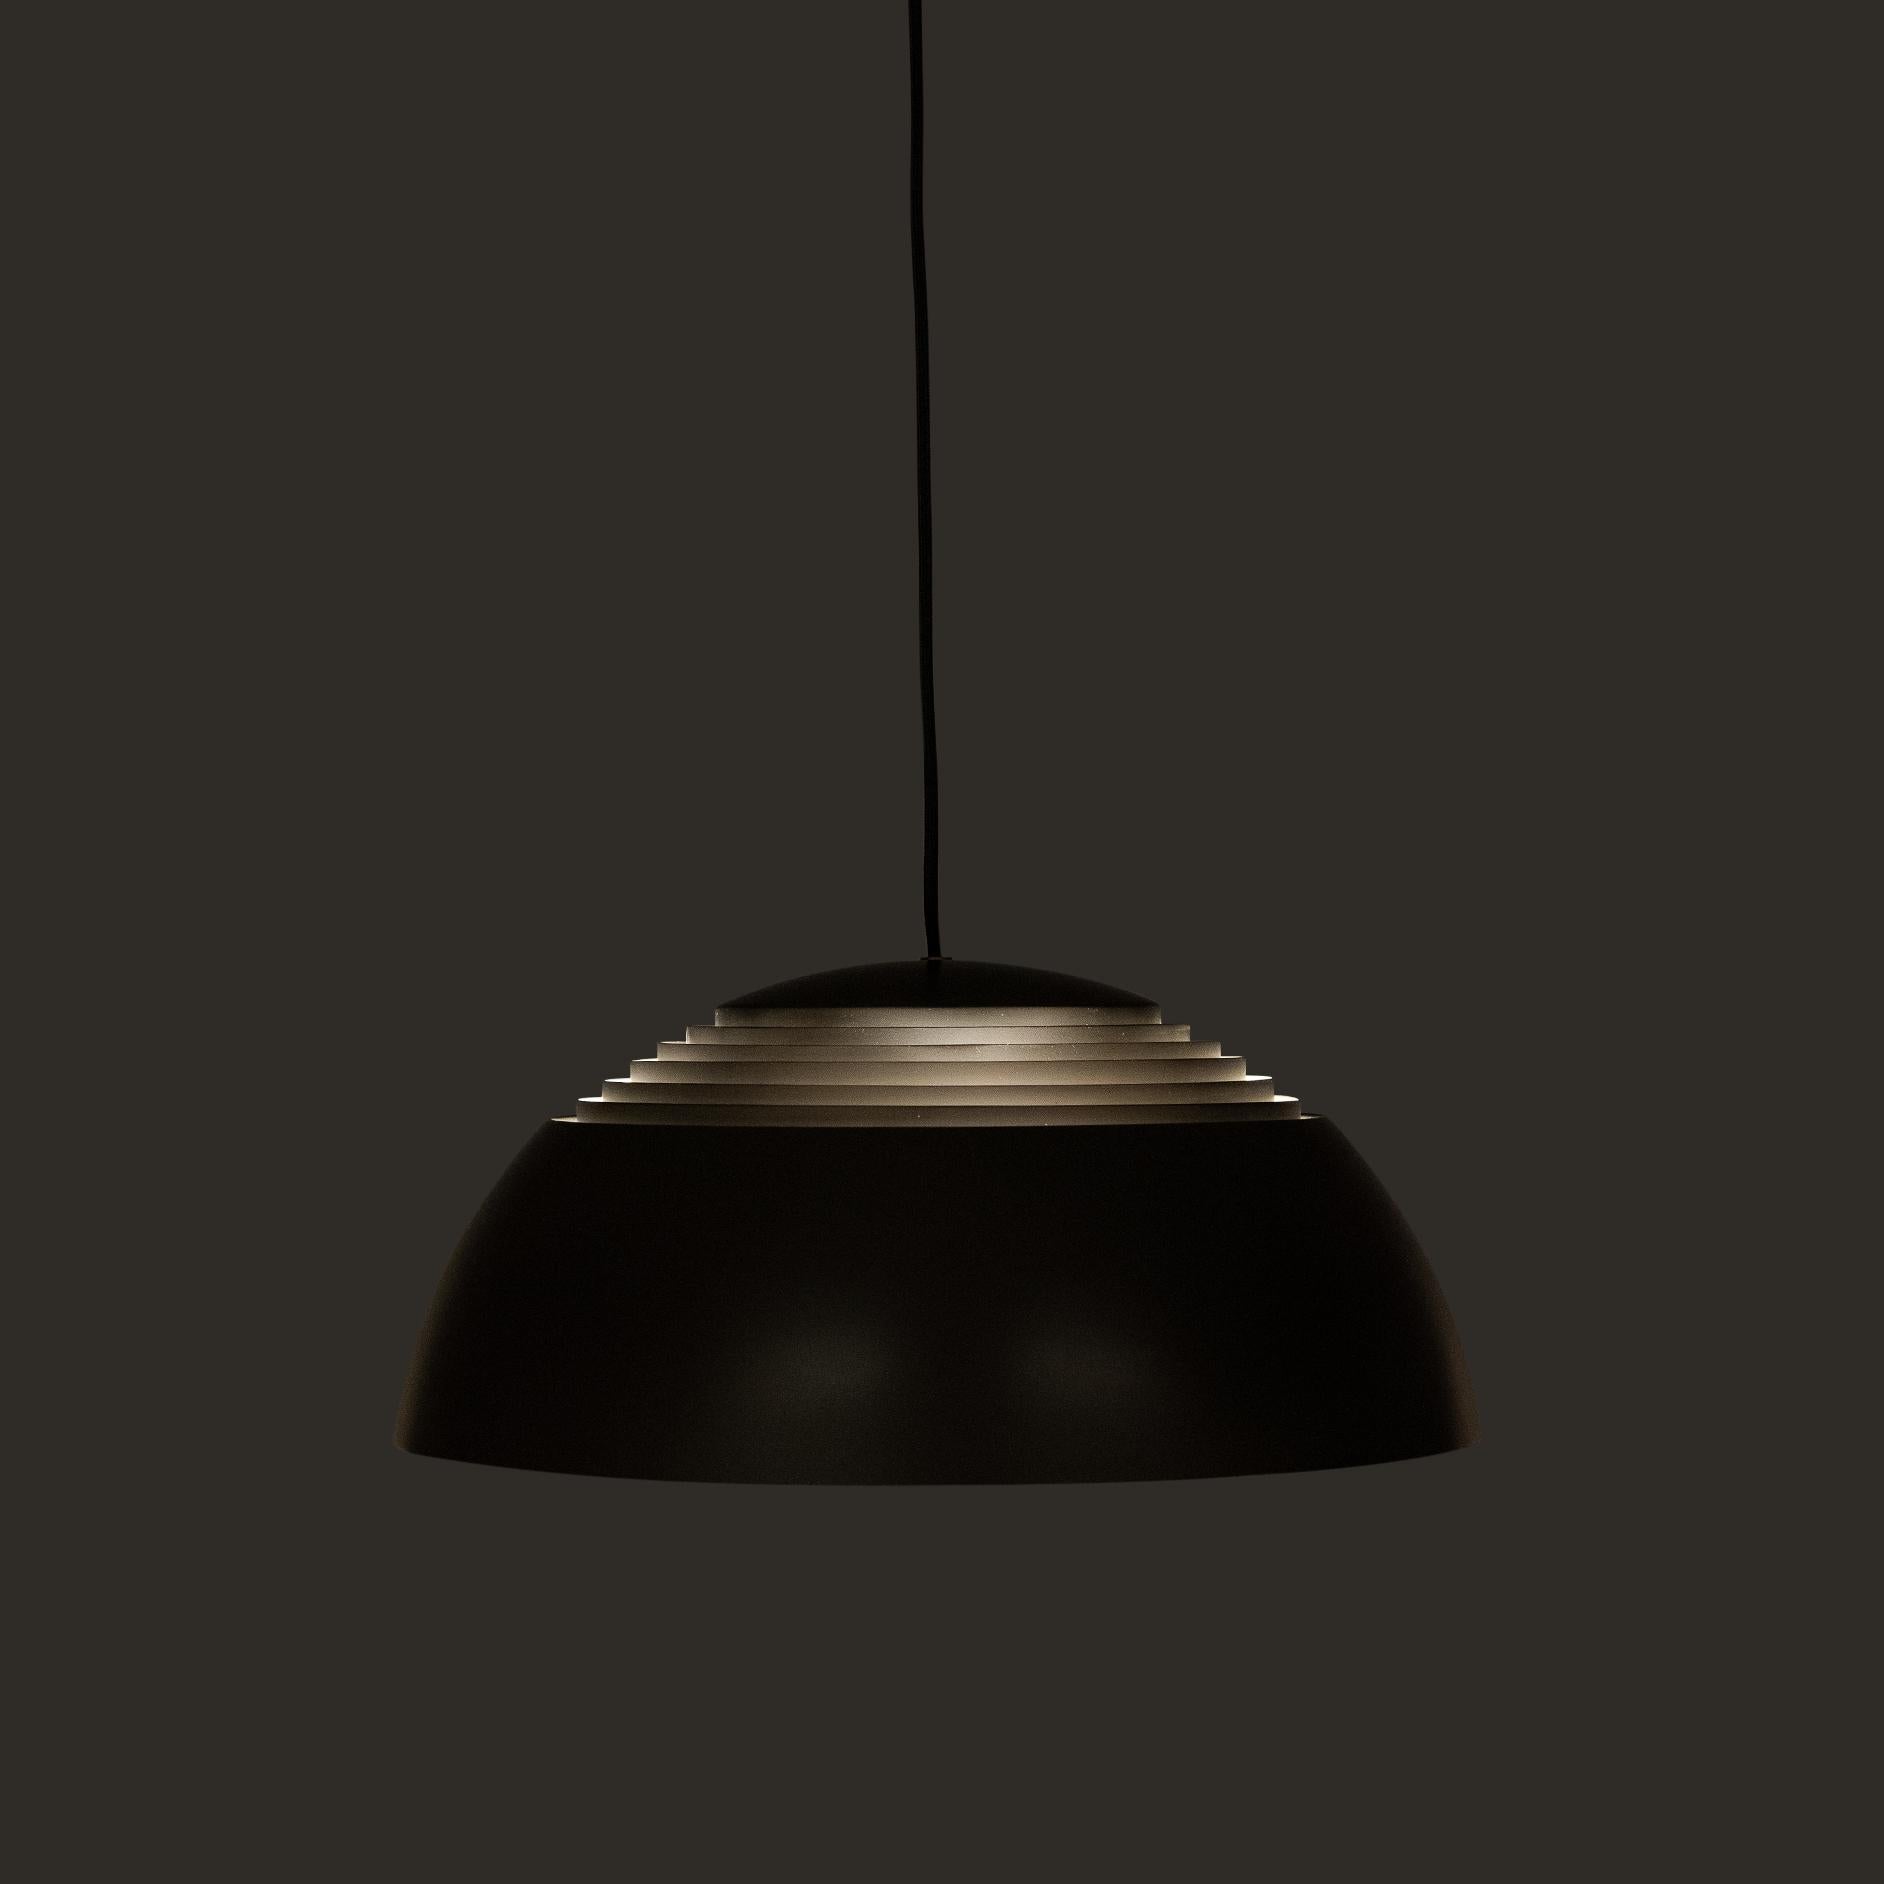 Danish Dark Grey Arne Jacobsen Lamp by Arne Jacobsen for Louis Poulsen, 1970s For Sale